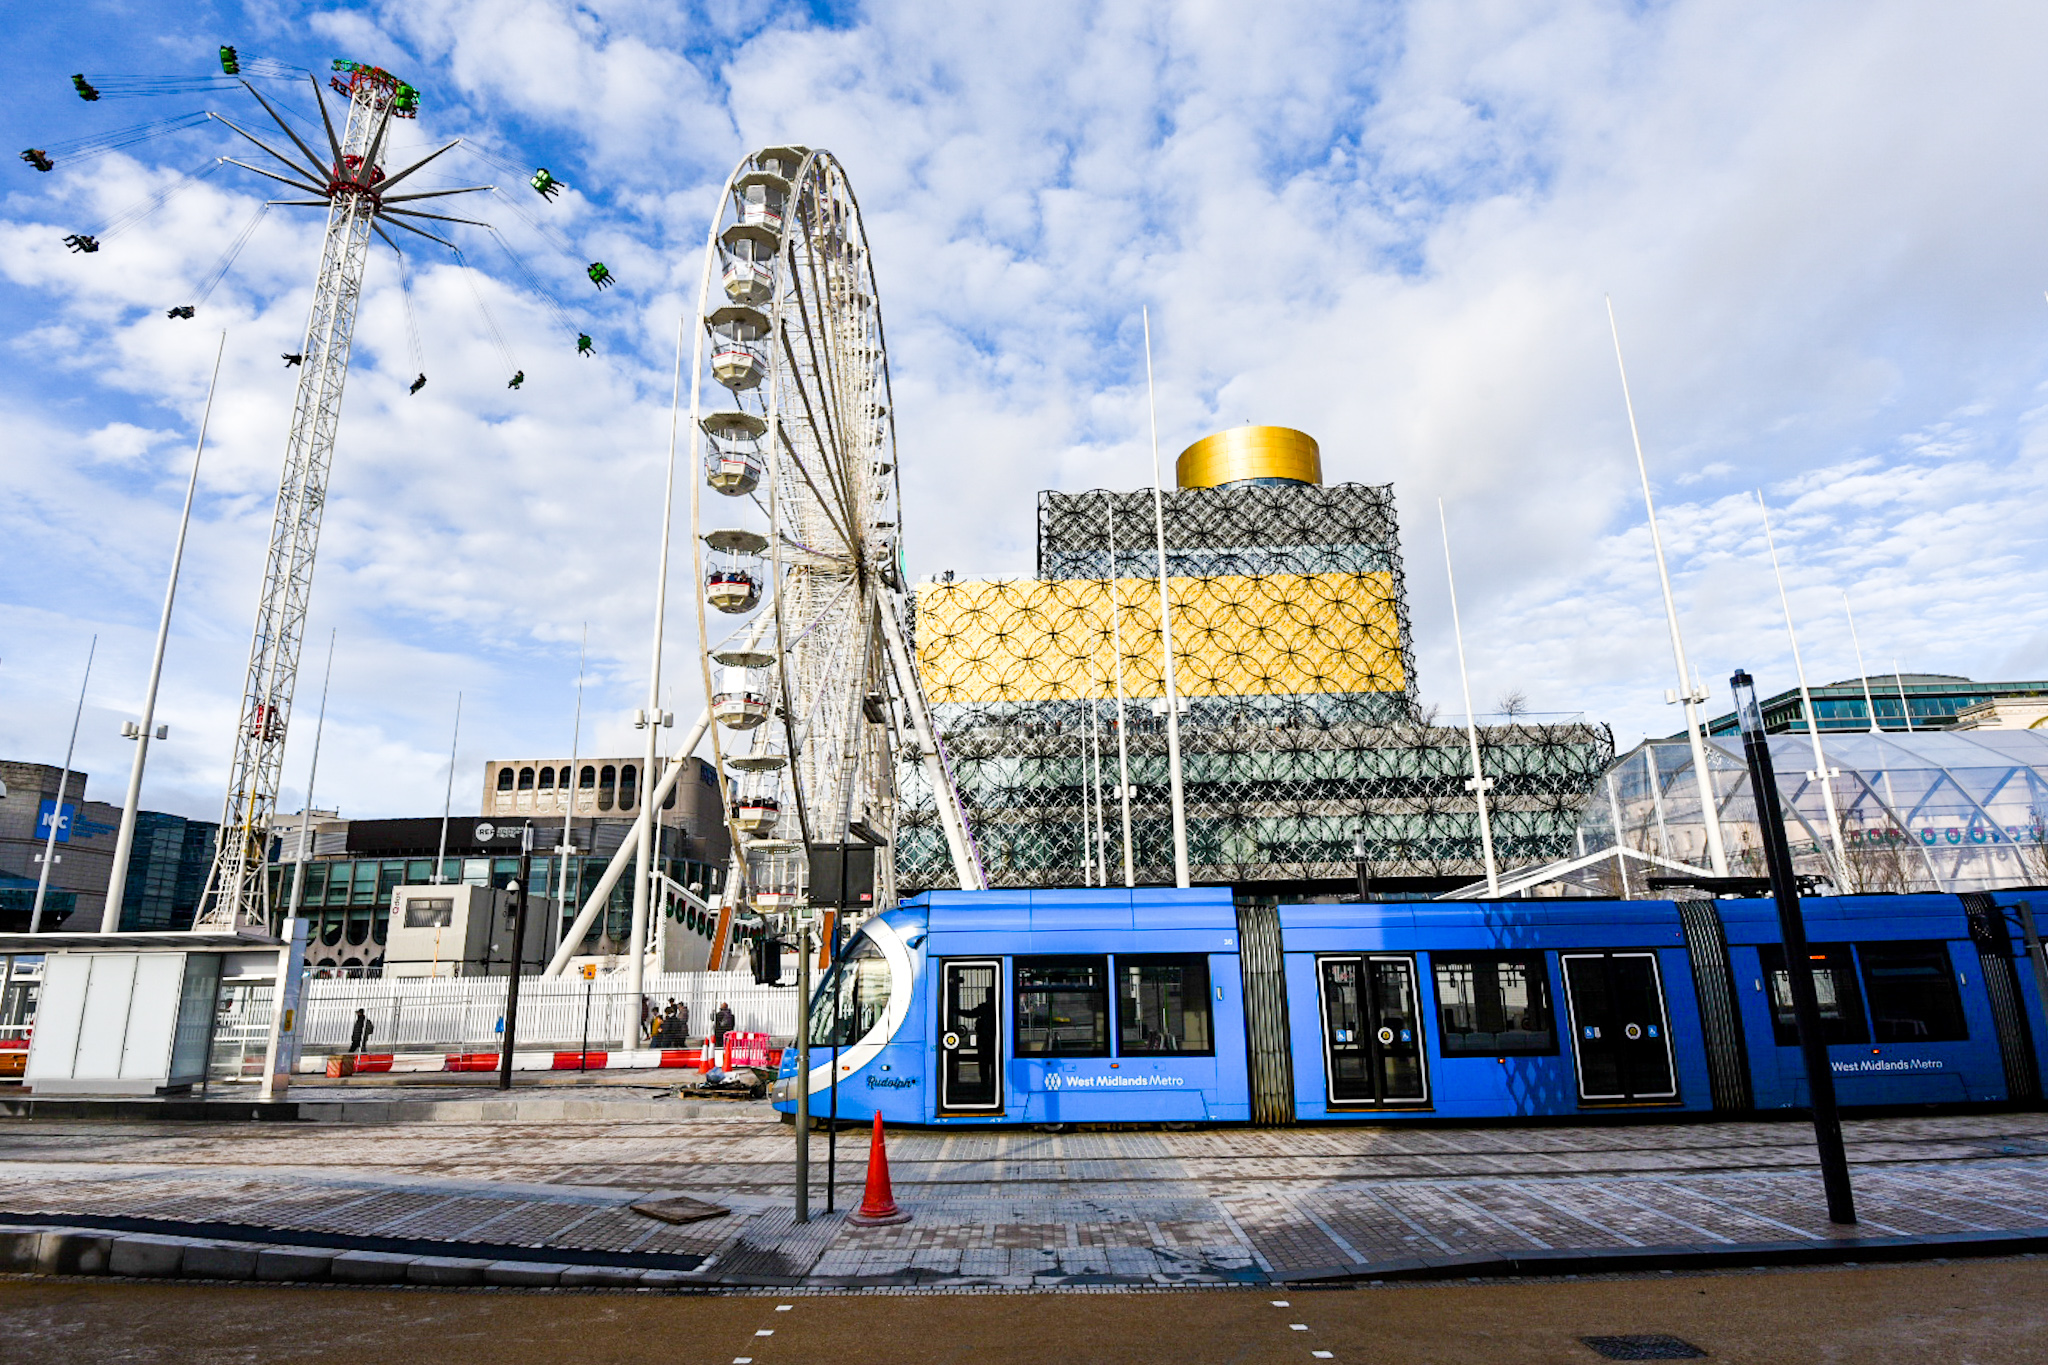 Birmingham city centre tram extension opens to passengers ahead of schedule